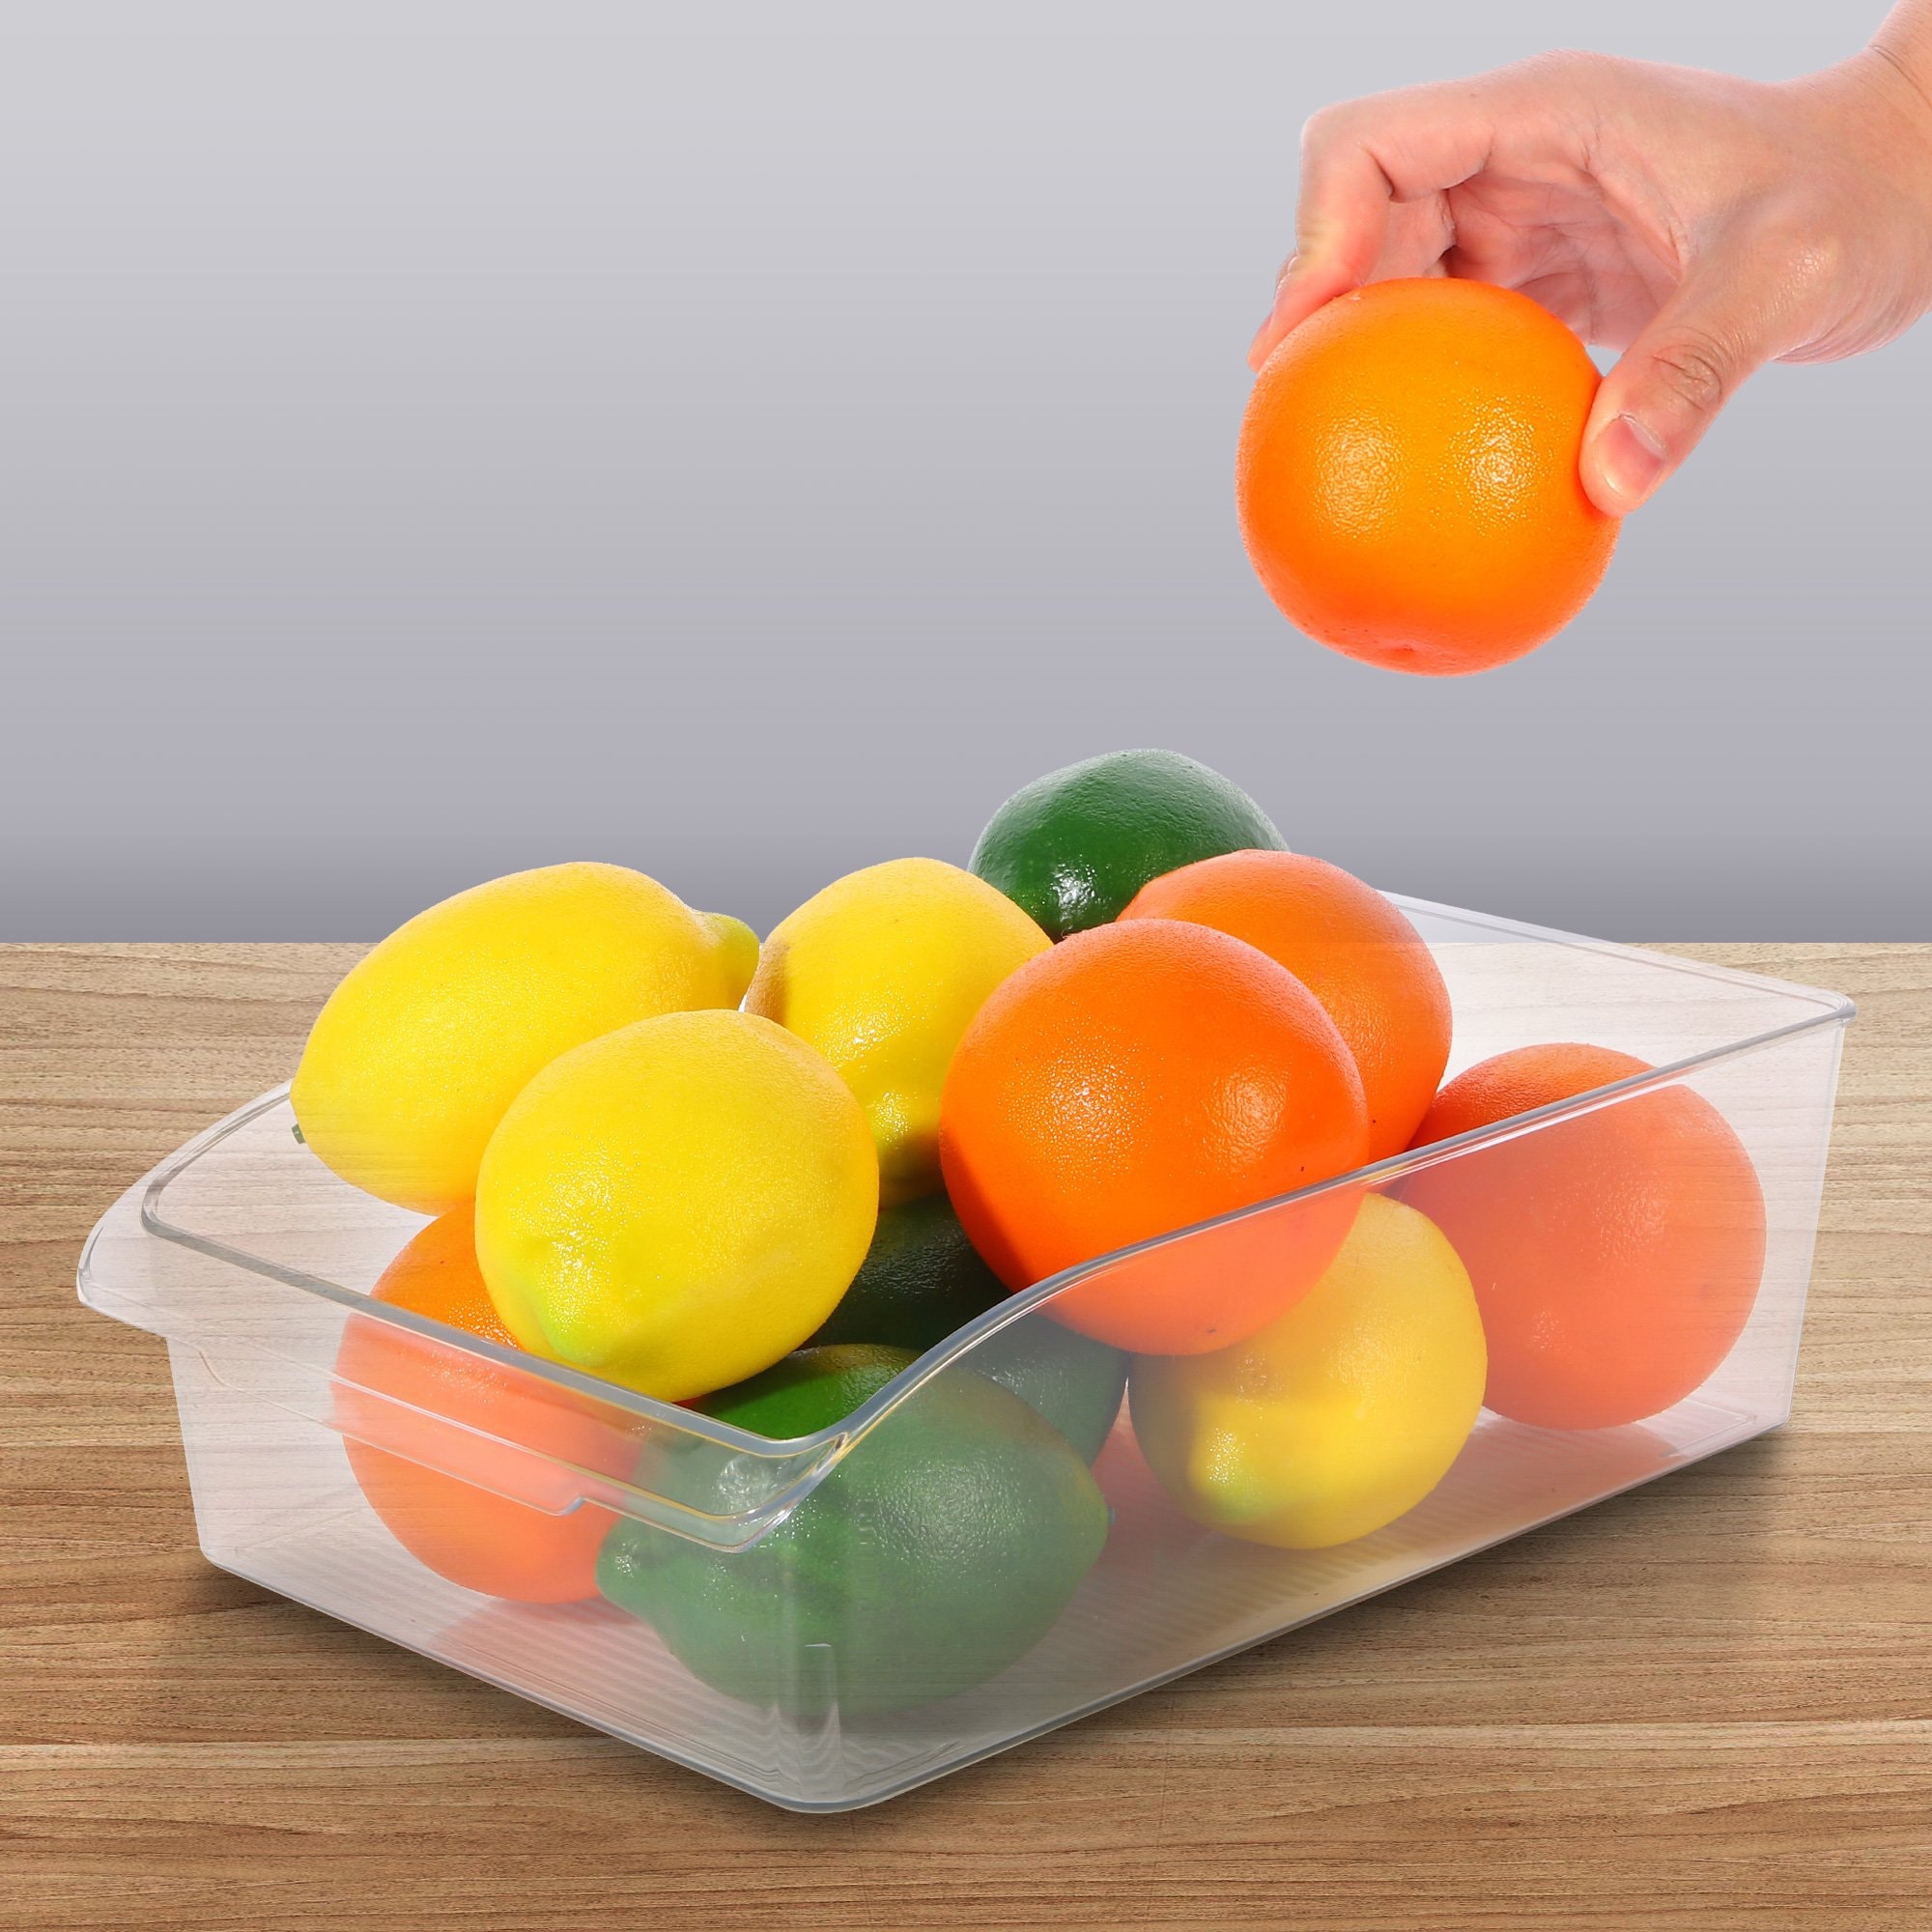 ROSELIFE 饮品蔬菜水果分类厨房冰箱收纳盒 12.2"x8.0"x3.6" 2个装